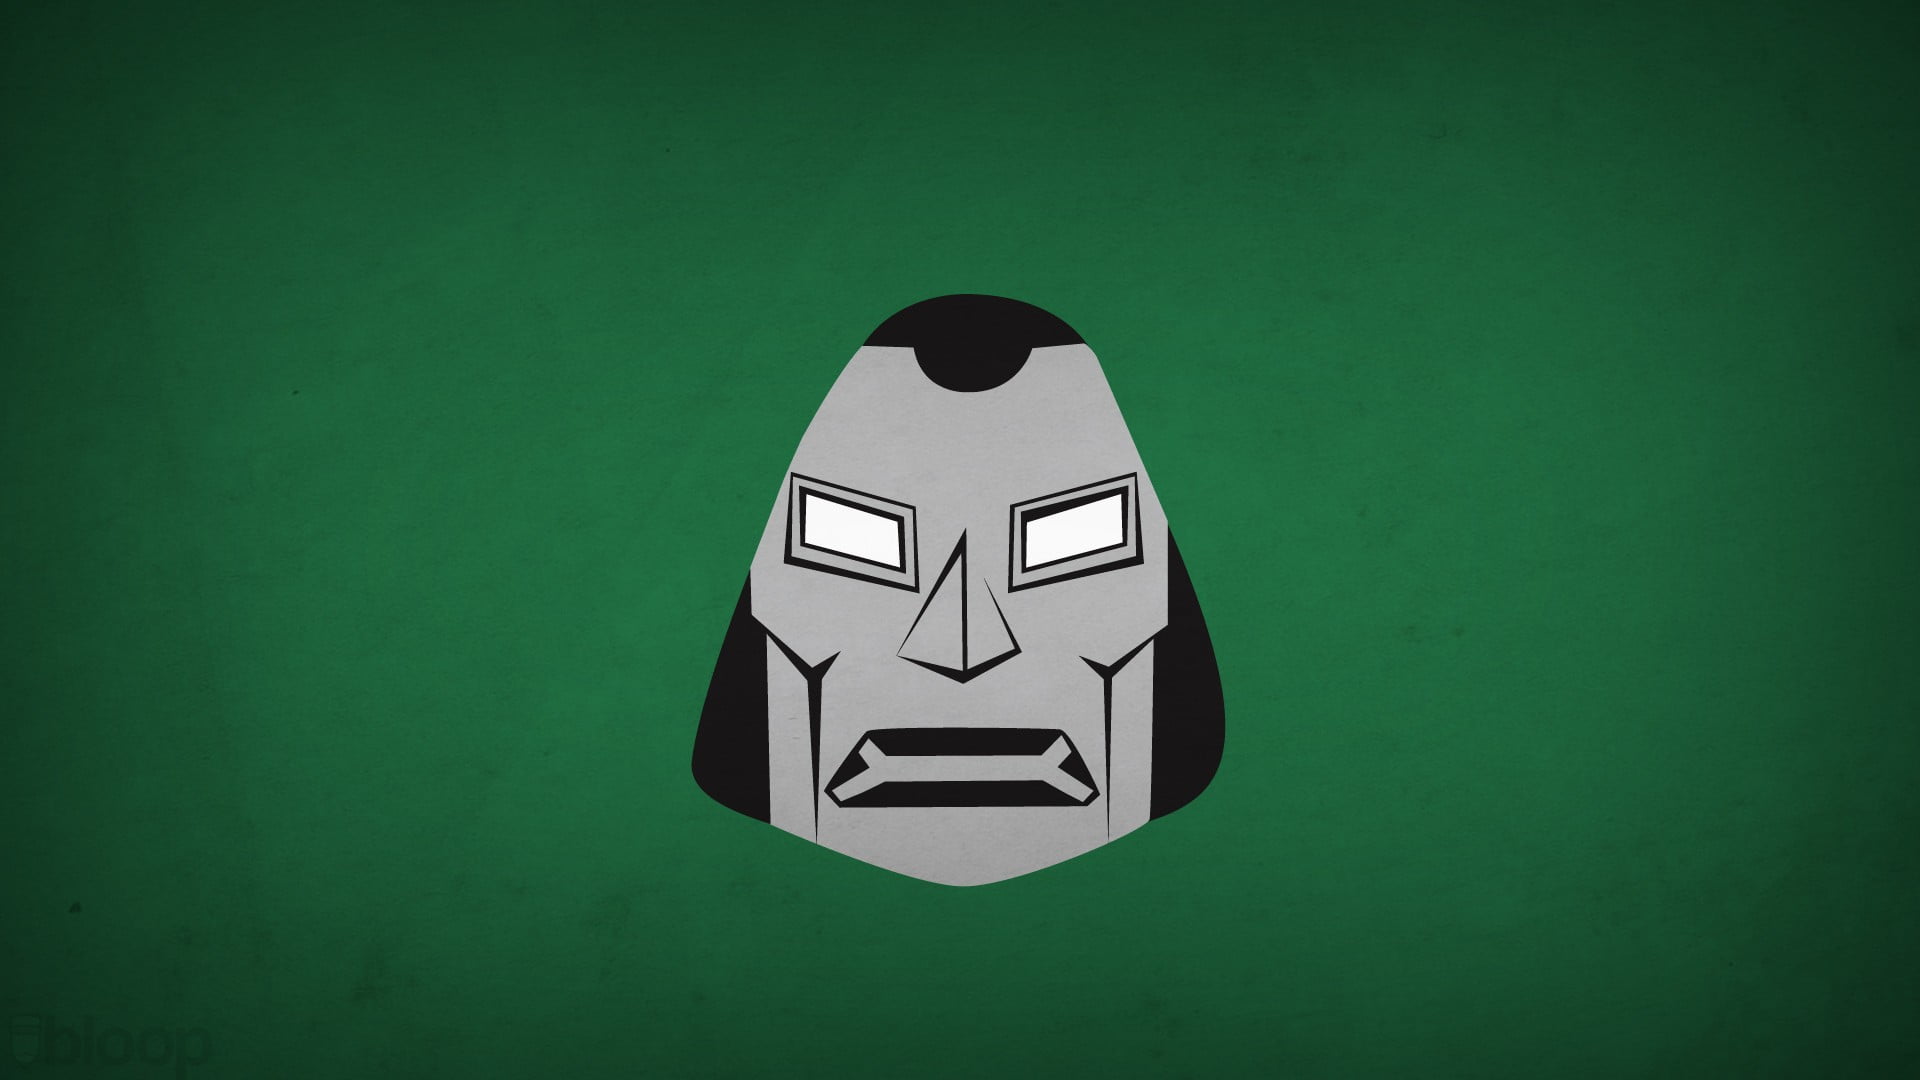 gray robot head illustration, Marvel Comics, Dr. Doom, villains, Blo0p